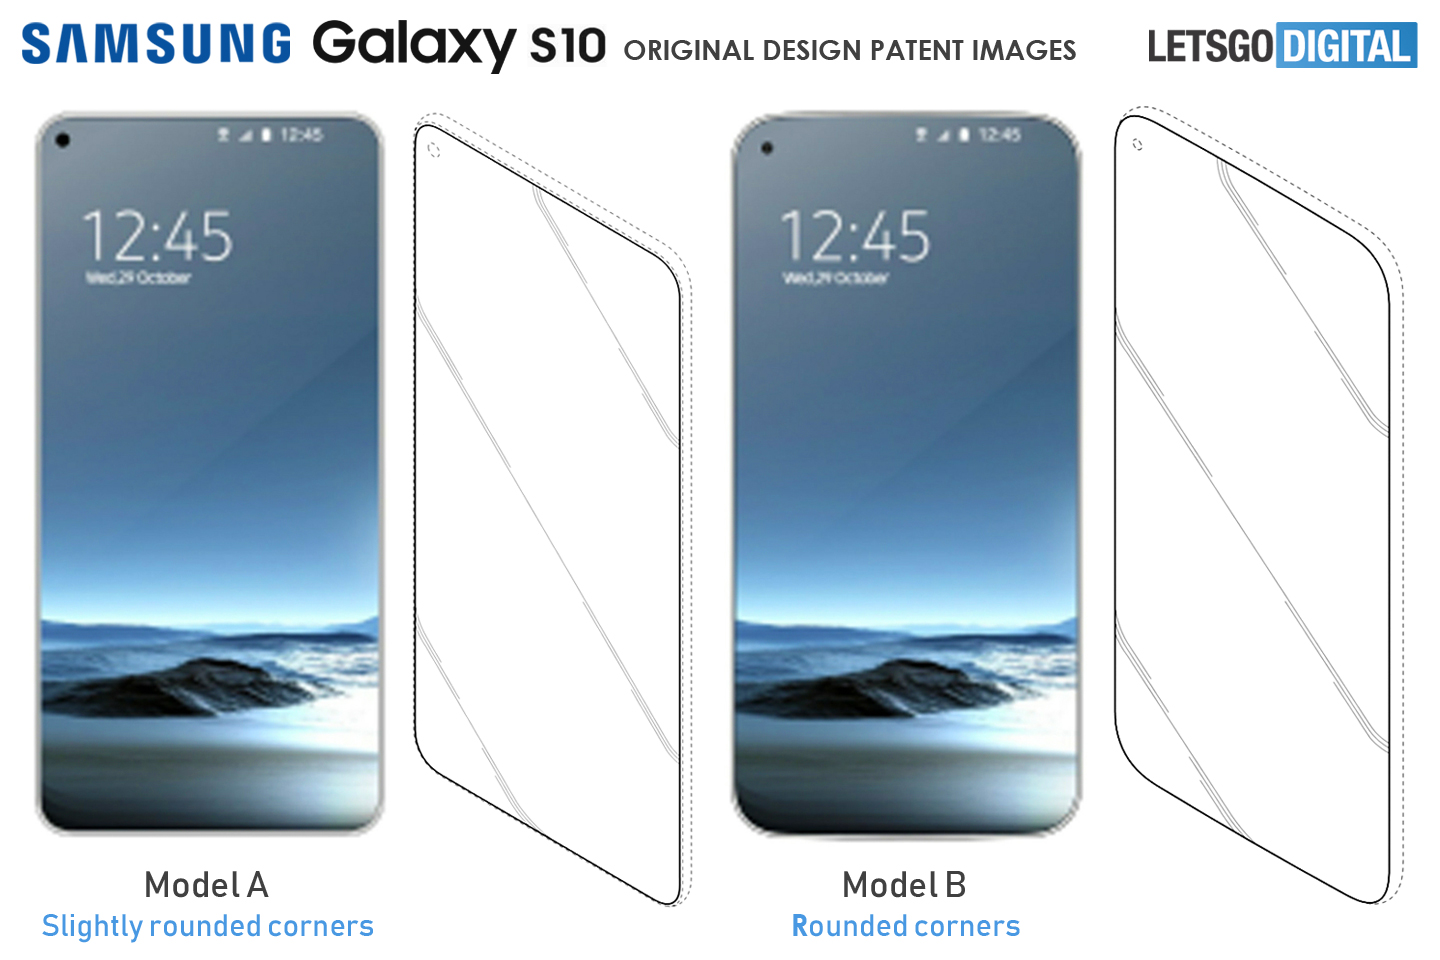 Samsung Galaxy S10 smartphone